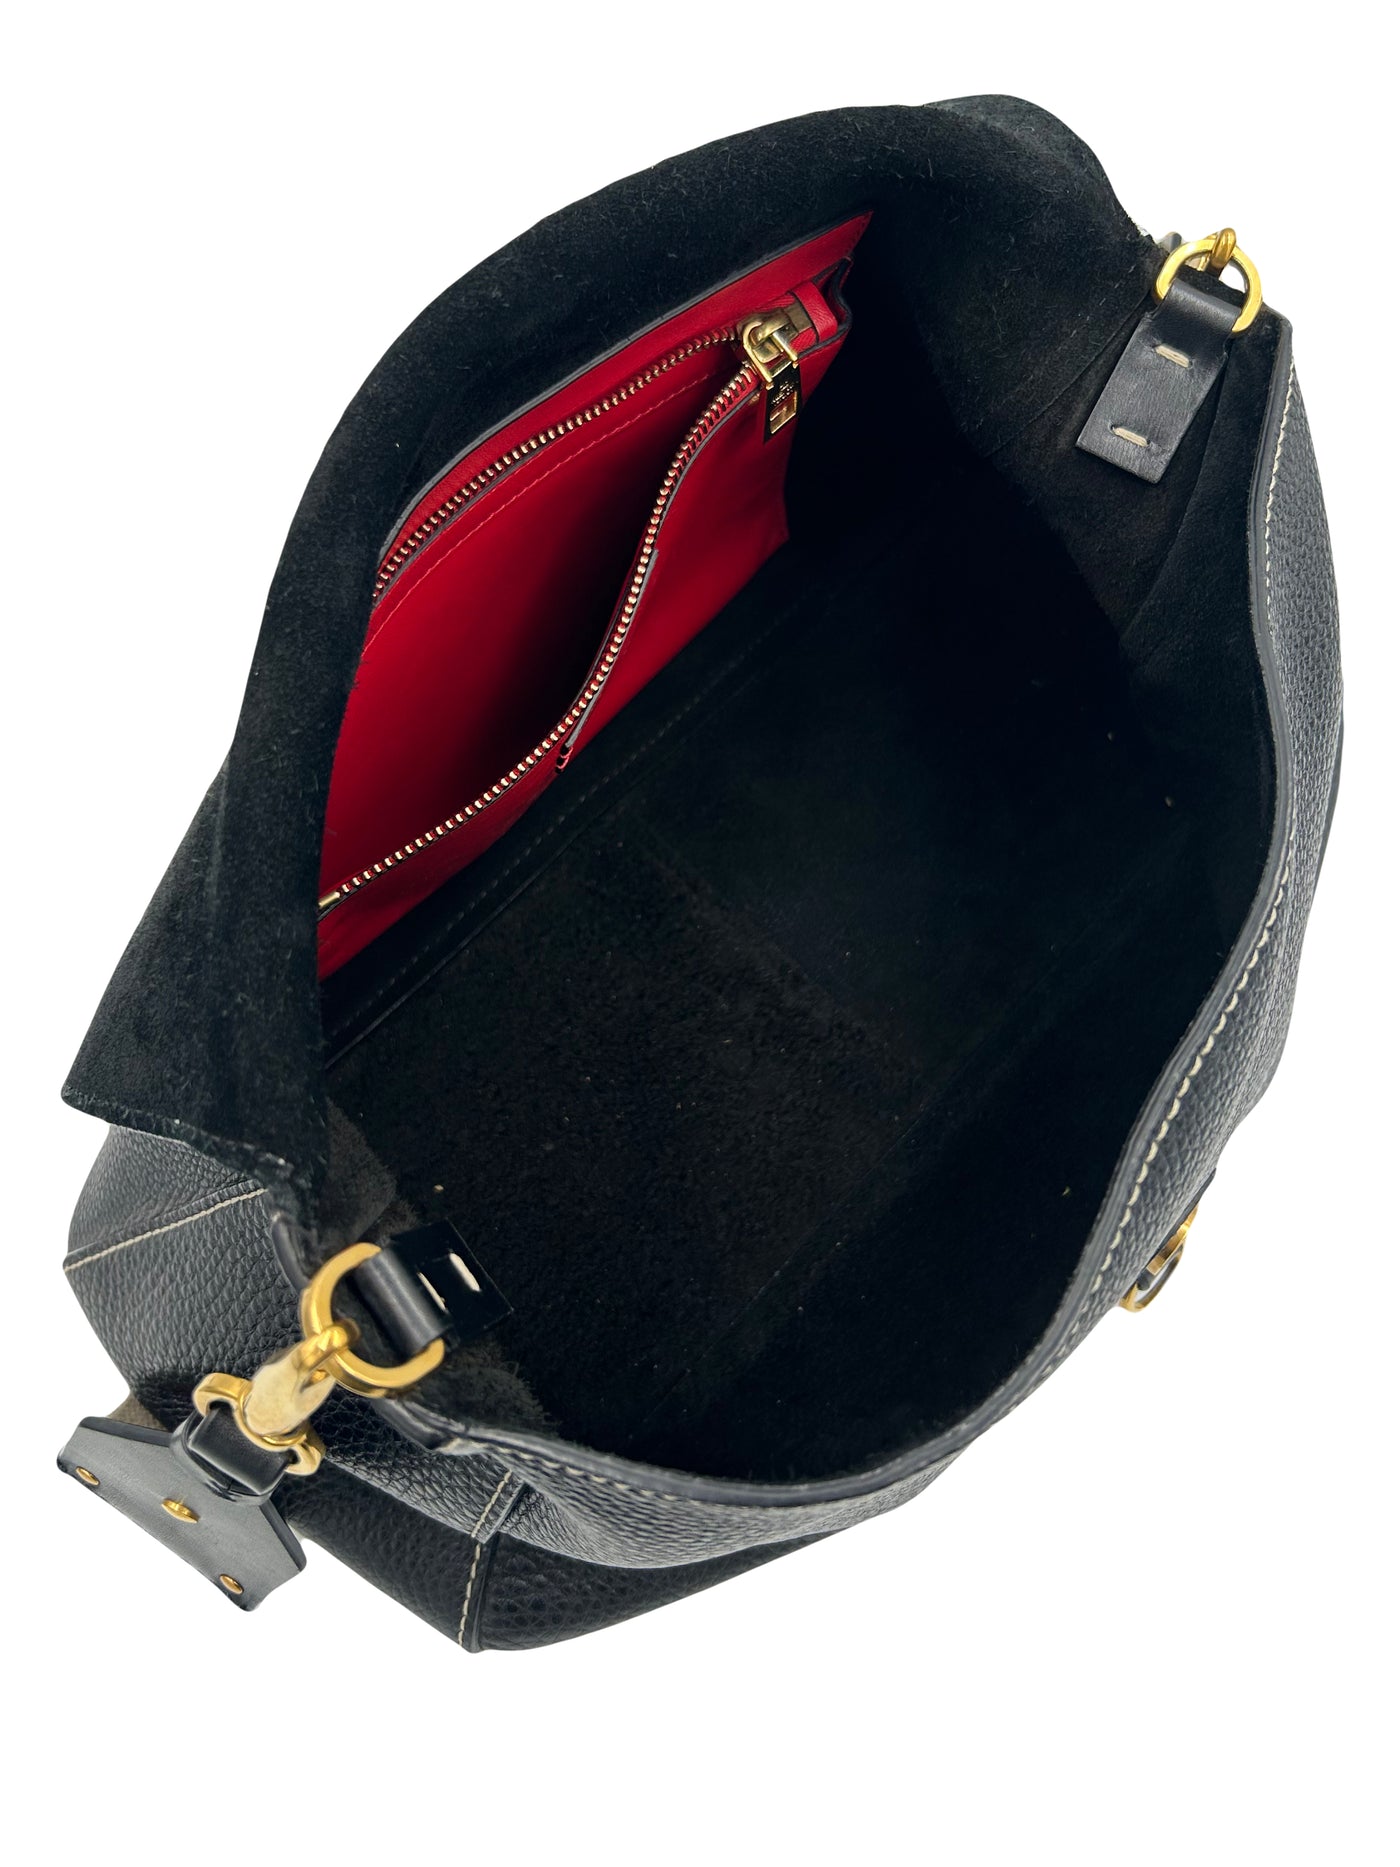 VALENTINO grain leather and canvas strap gold V signature bag